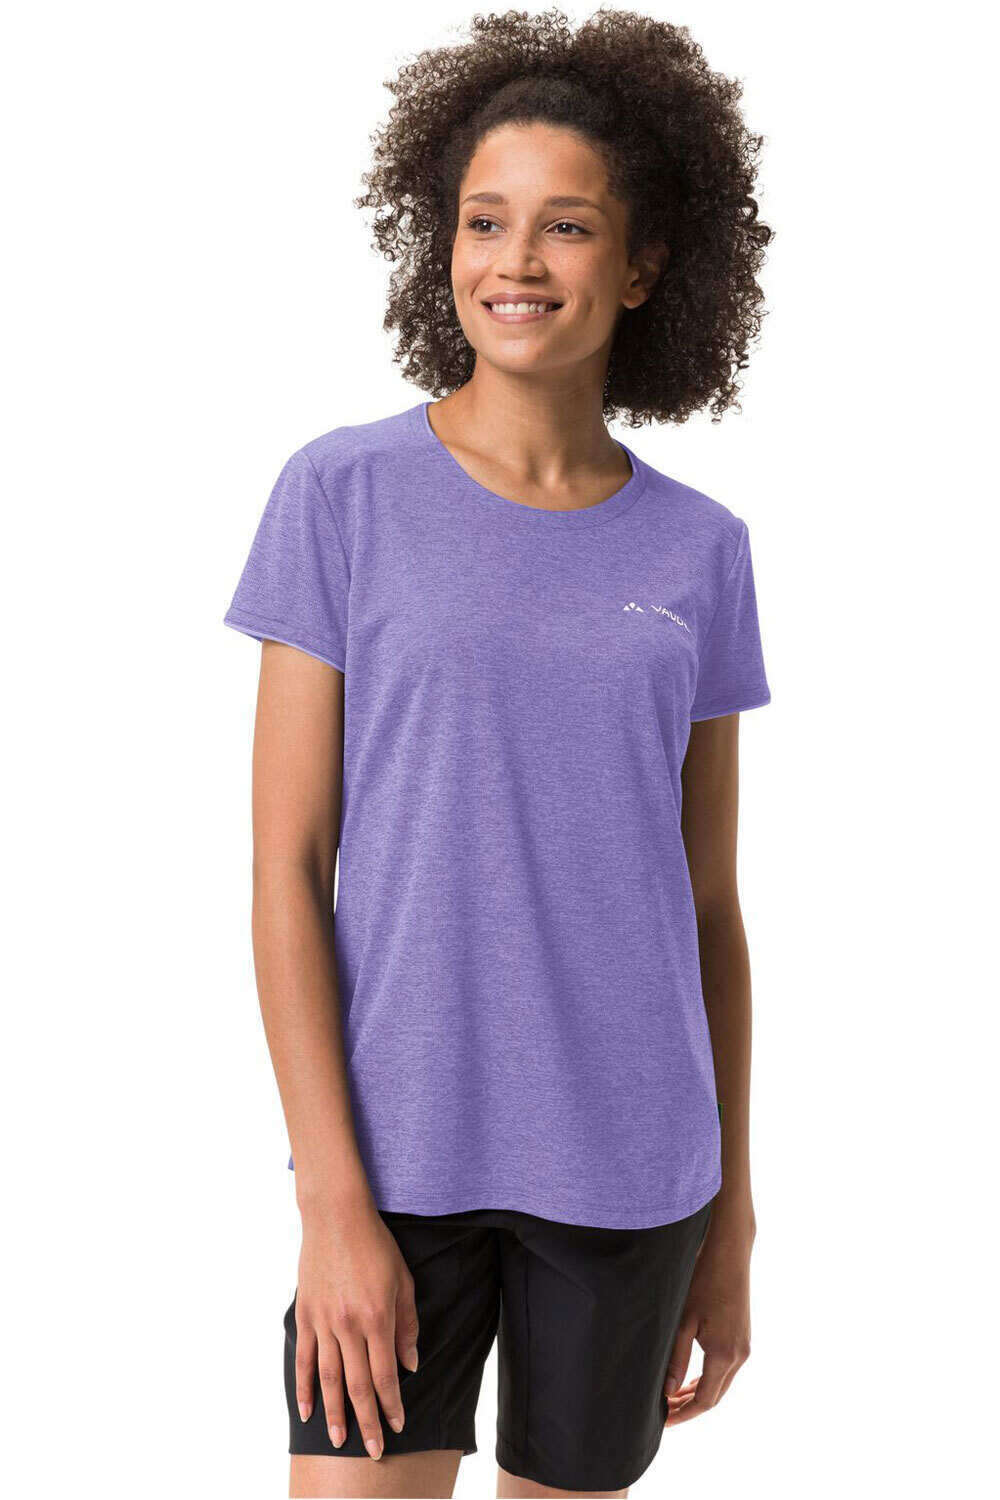 Vaude camiseta montaña manga corta mujer Women's Essential T-Shirt vista frontal